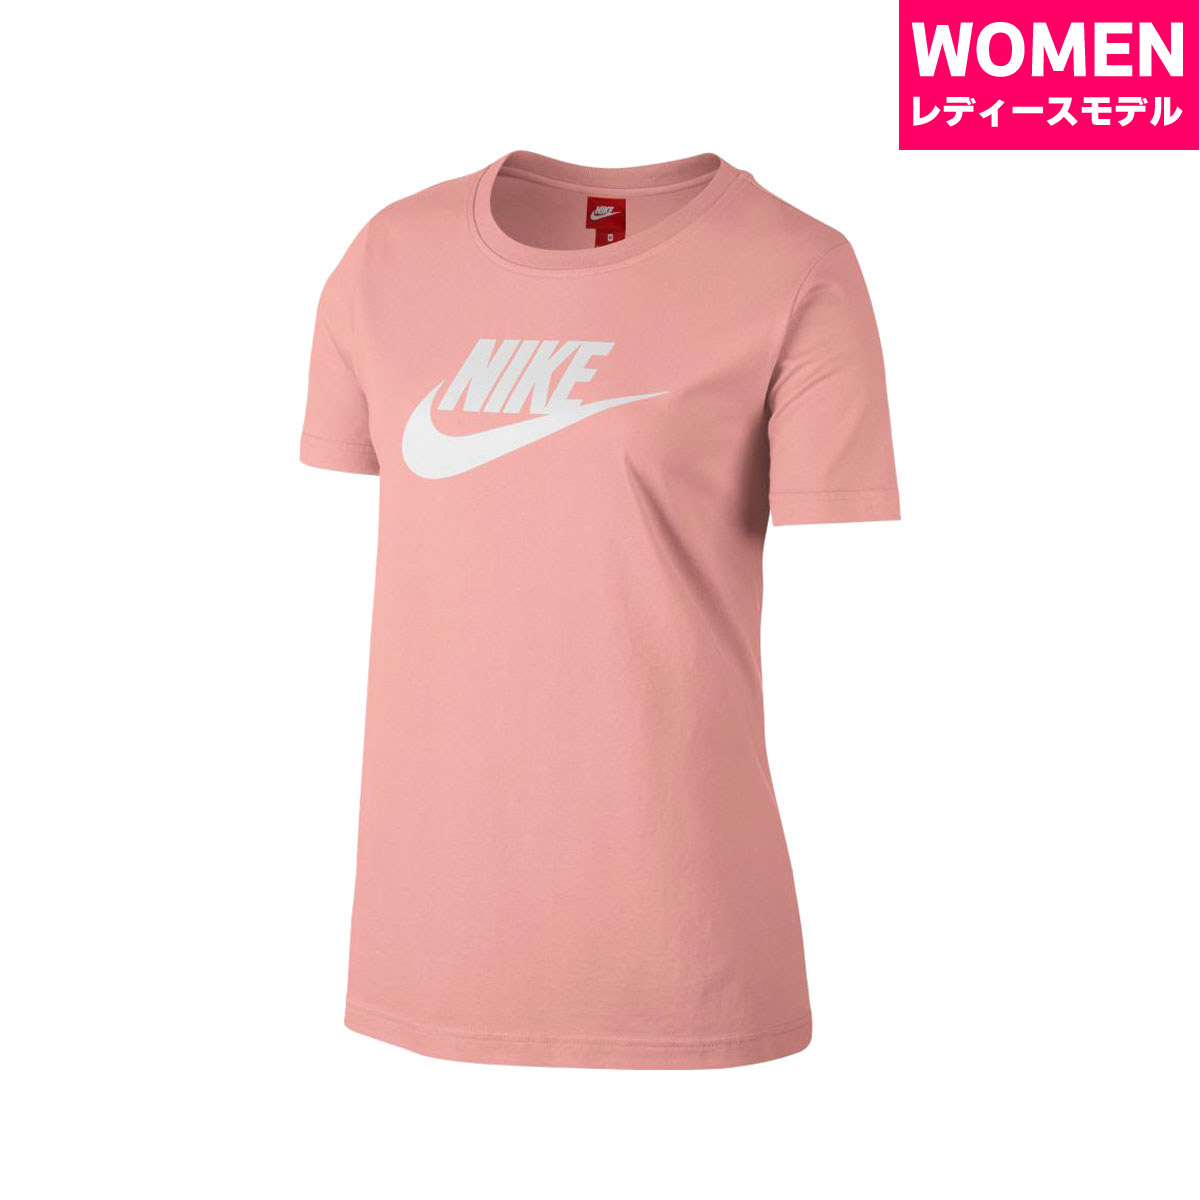 pink womens nike shirt